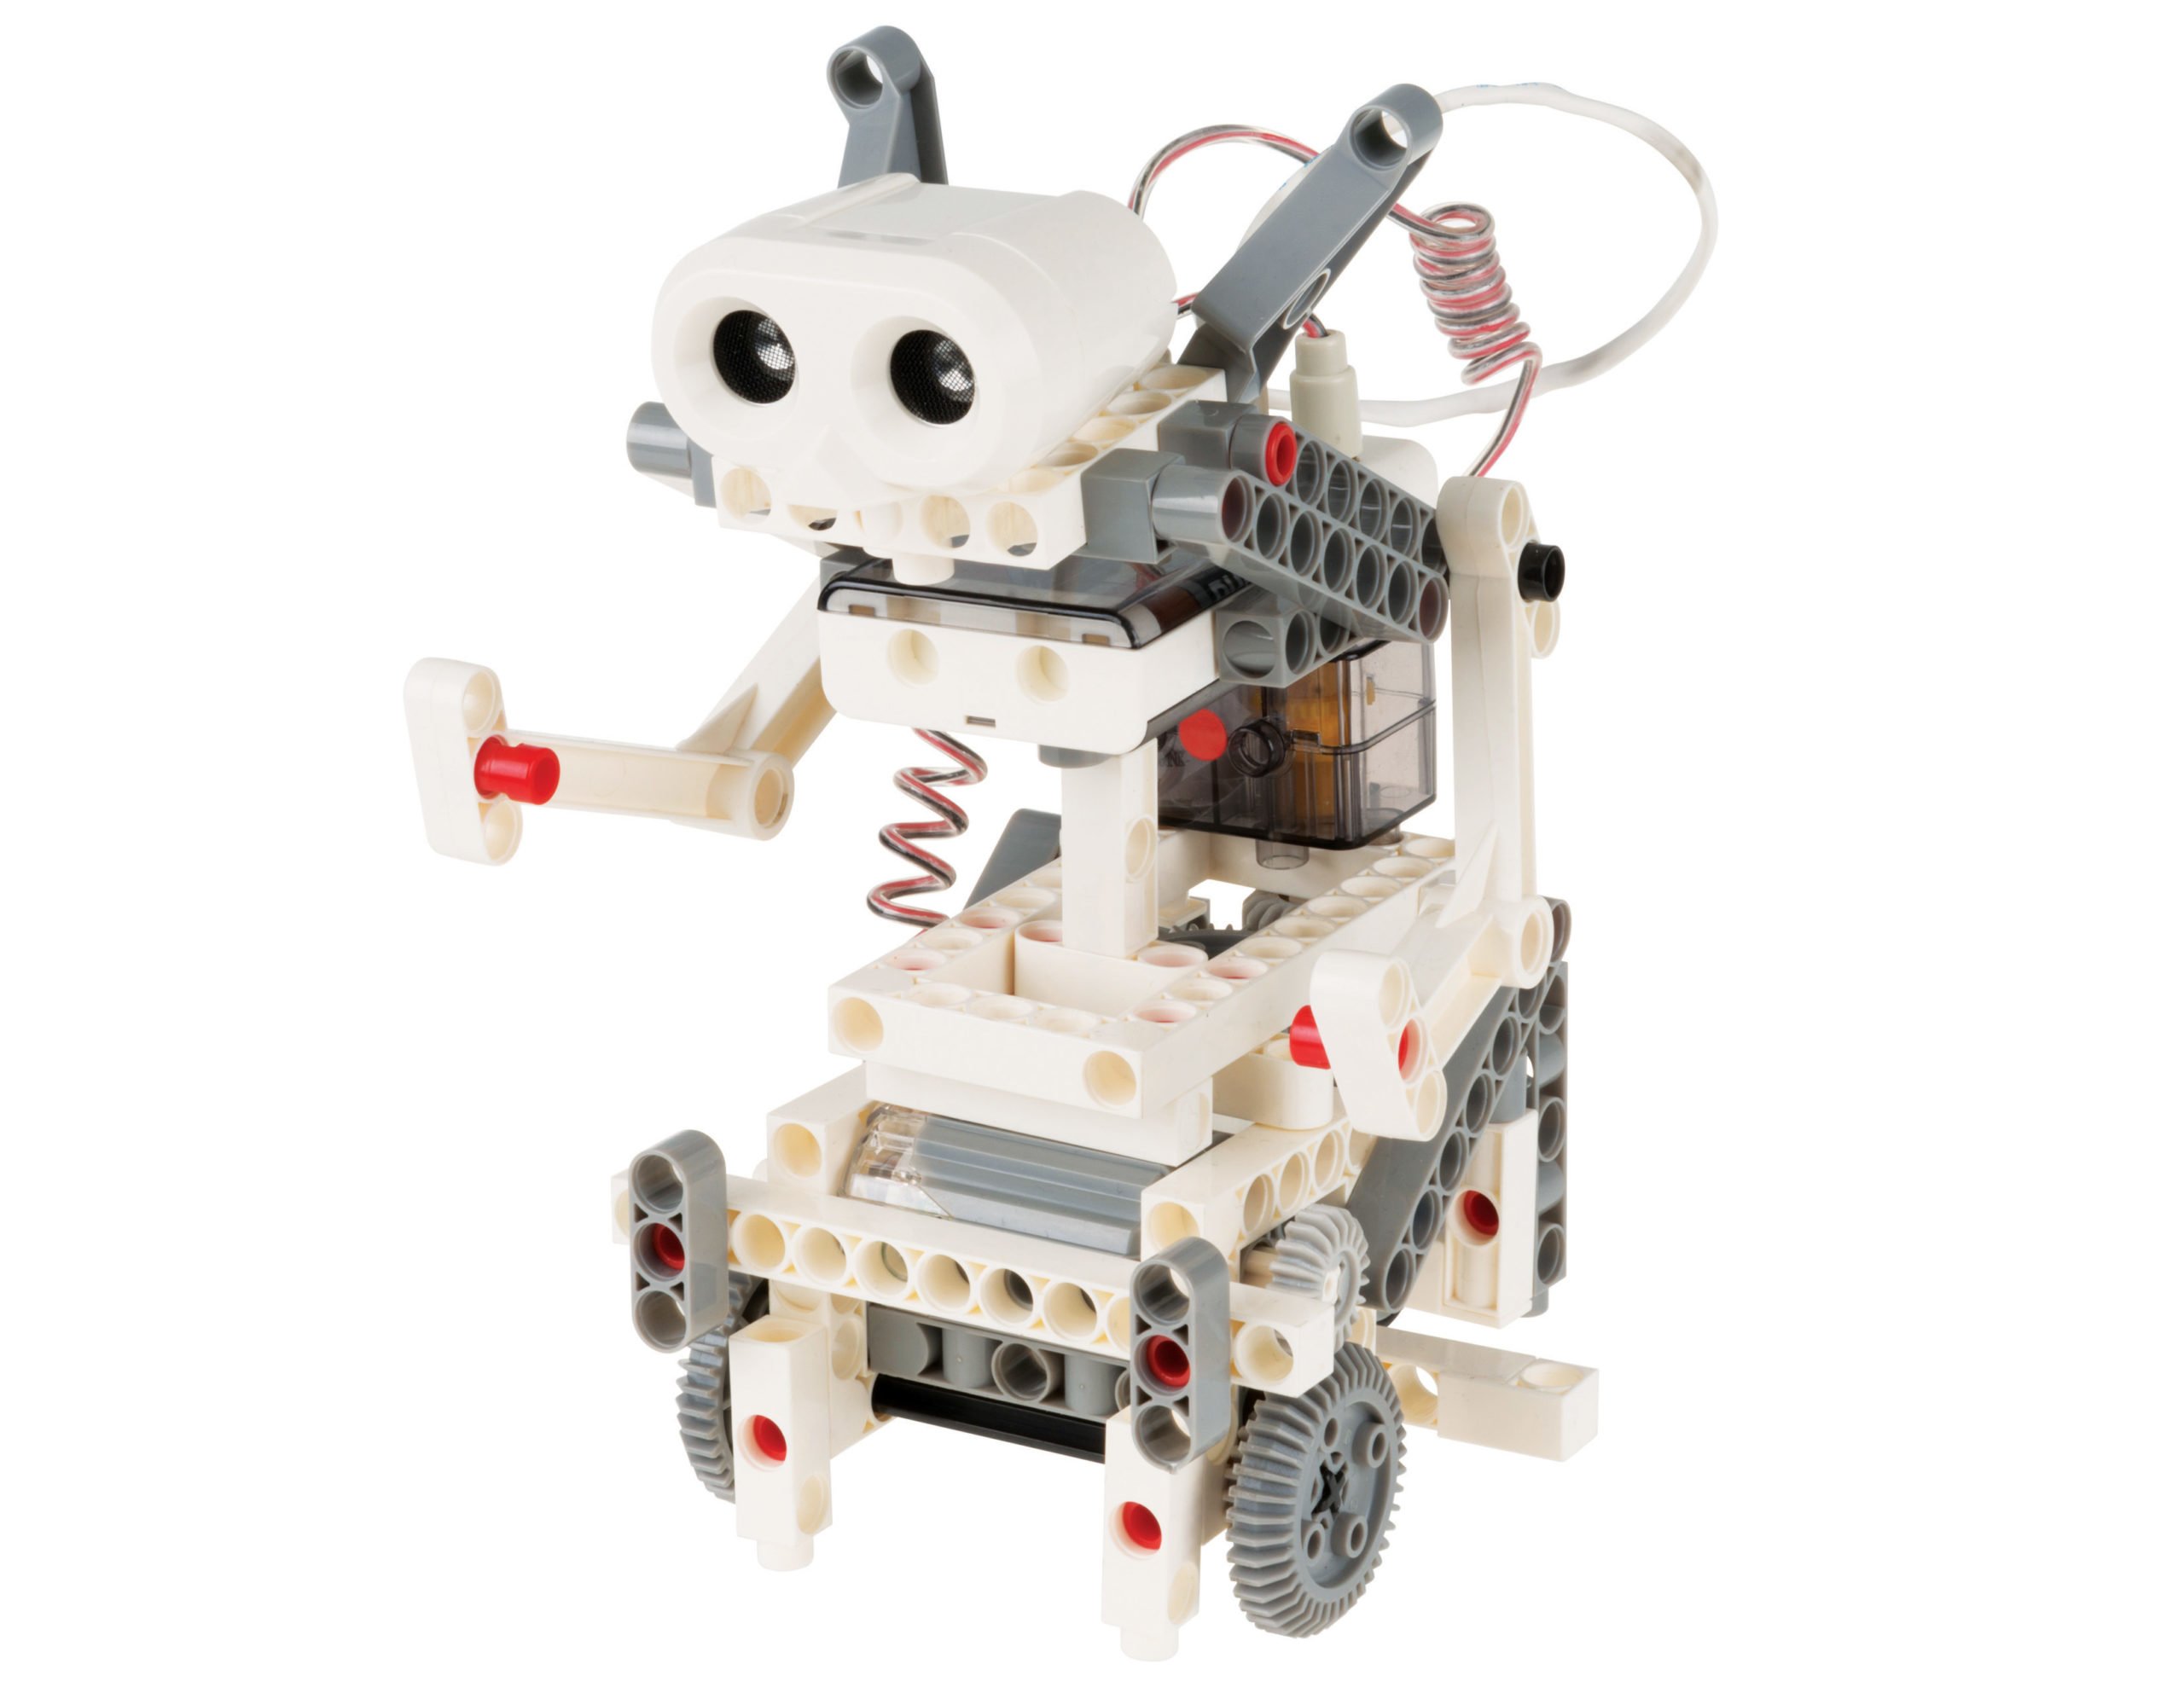 Thames & Kosmos 620375 Robotics Smart Machines for sale online 